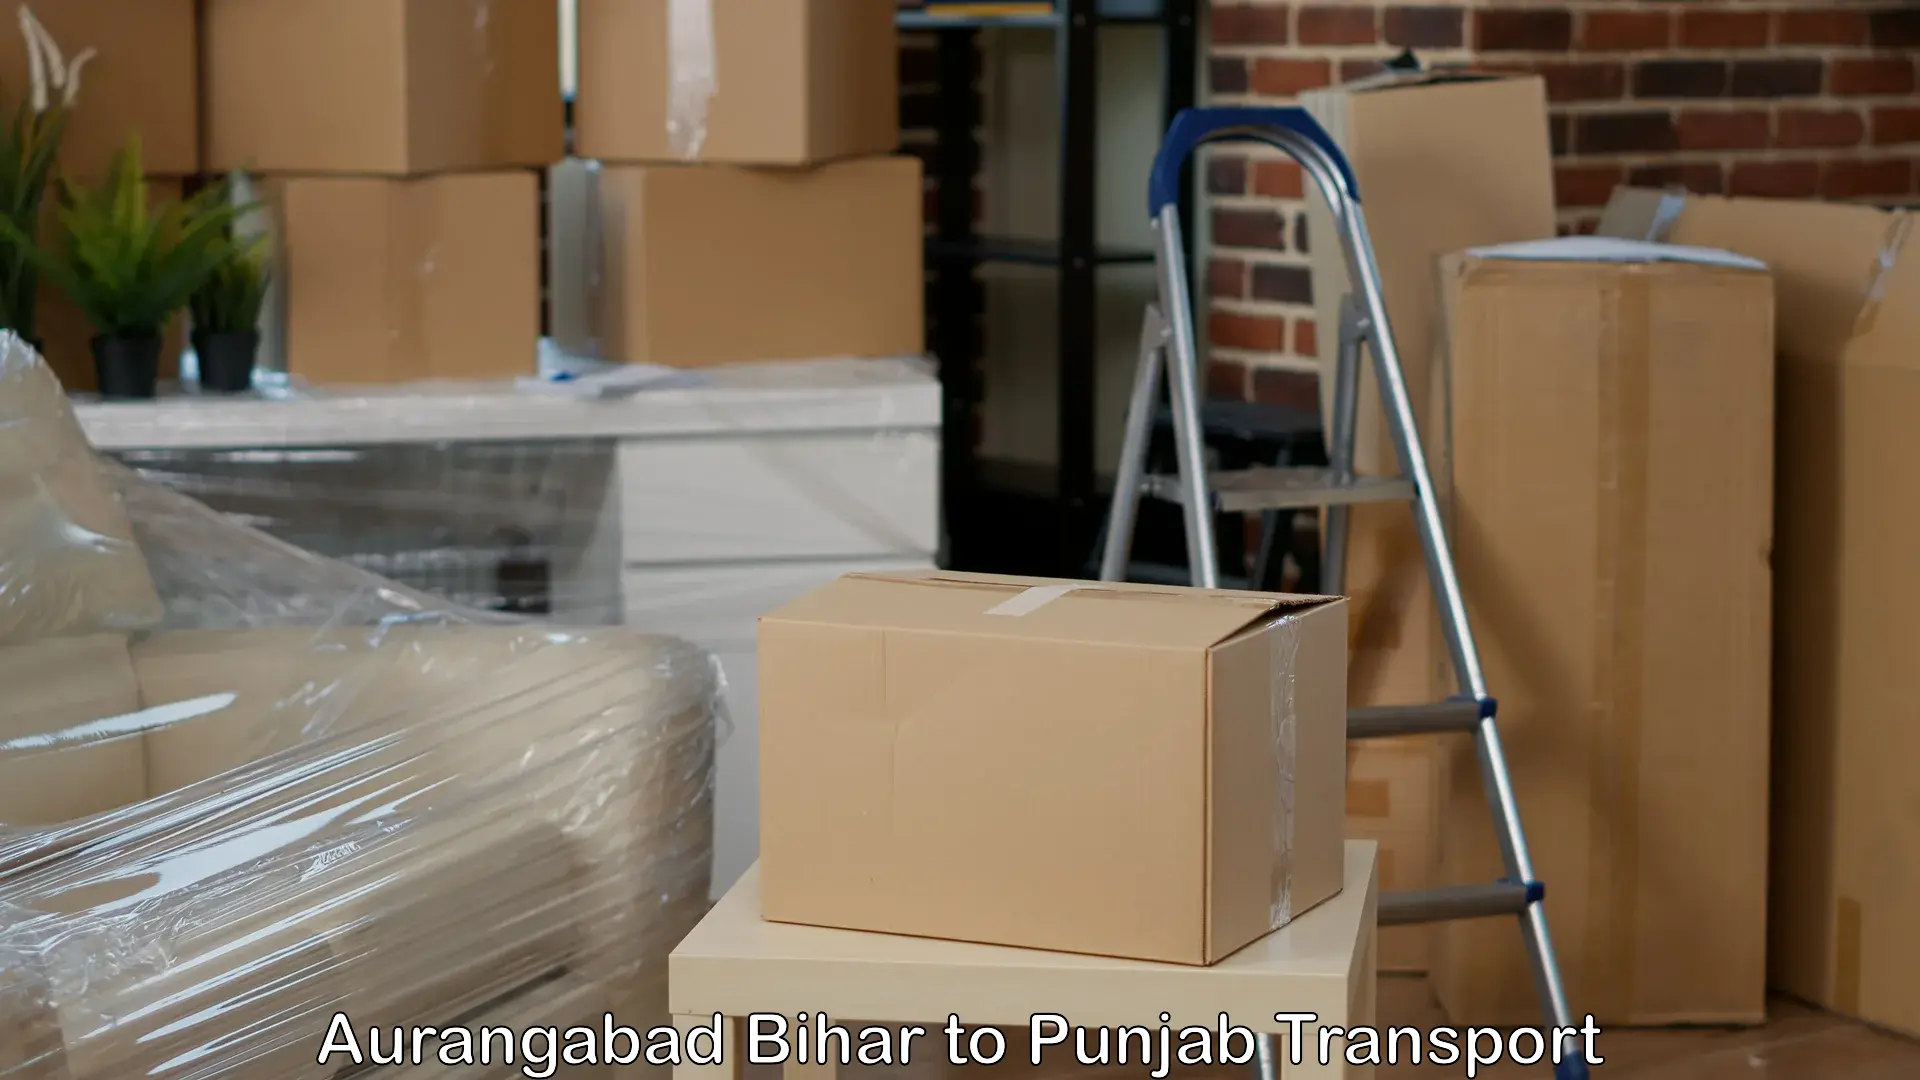 Lorry transport service Aurangabad Bihar to Anandpur Sahib